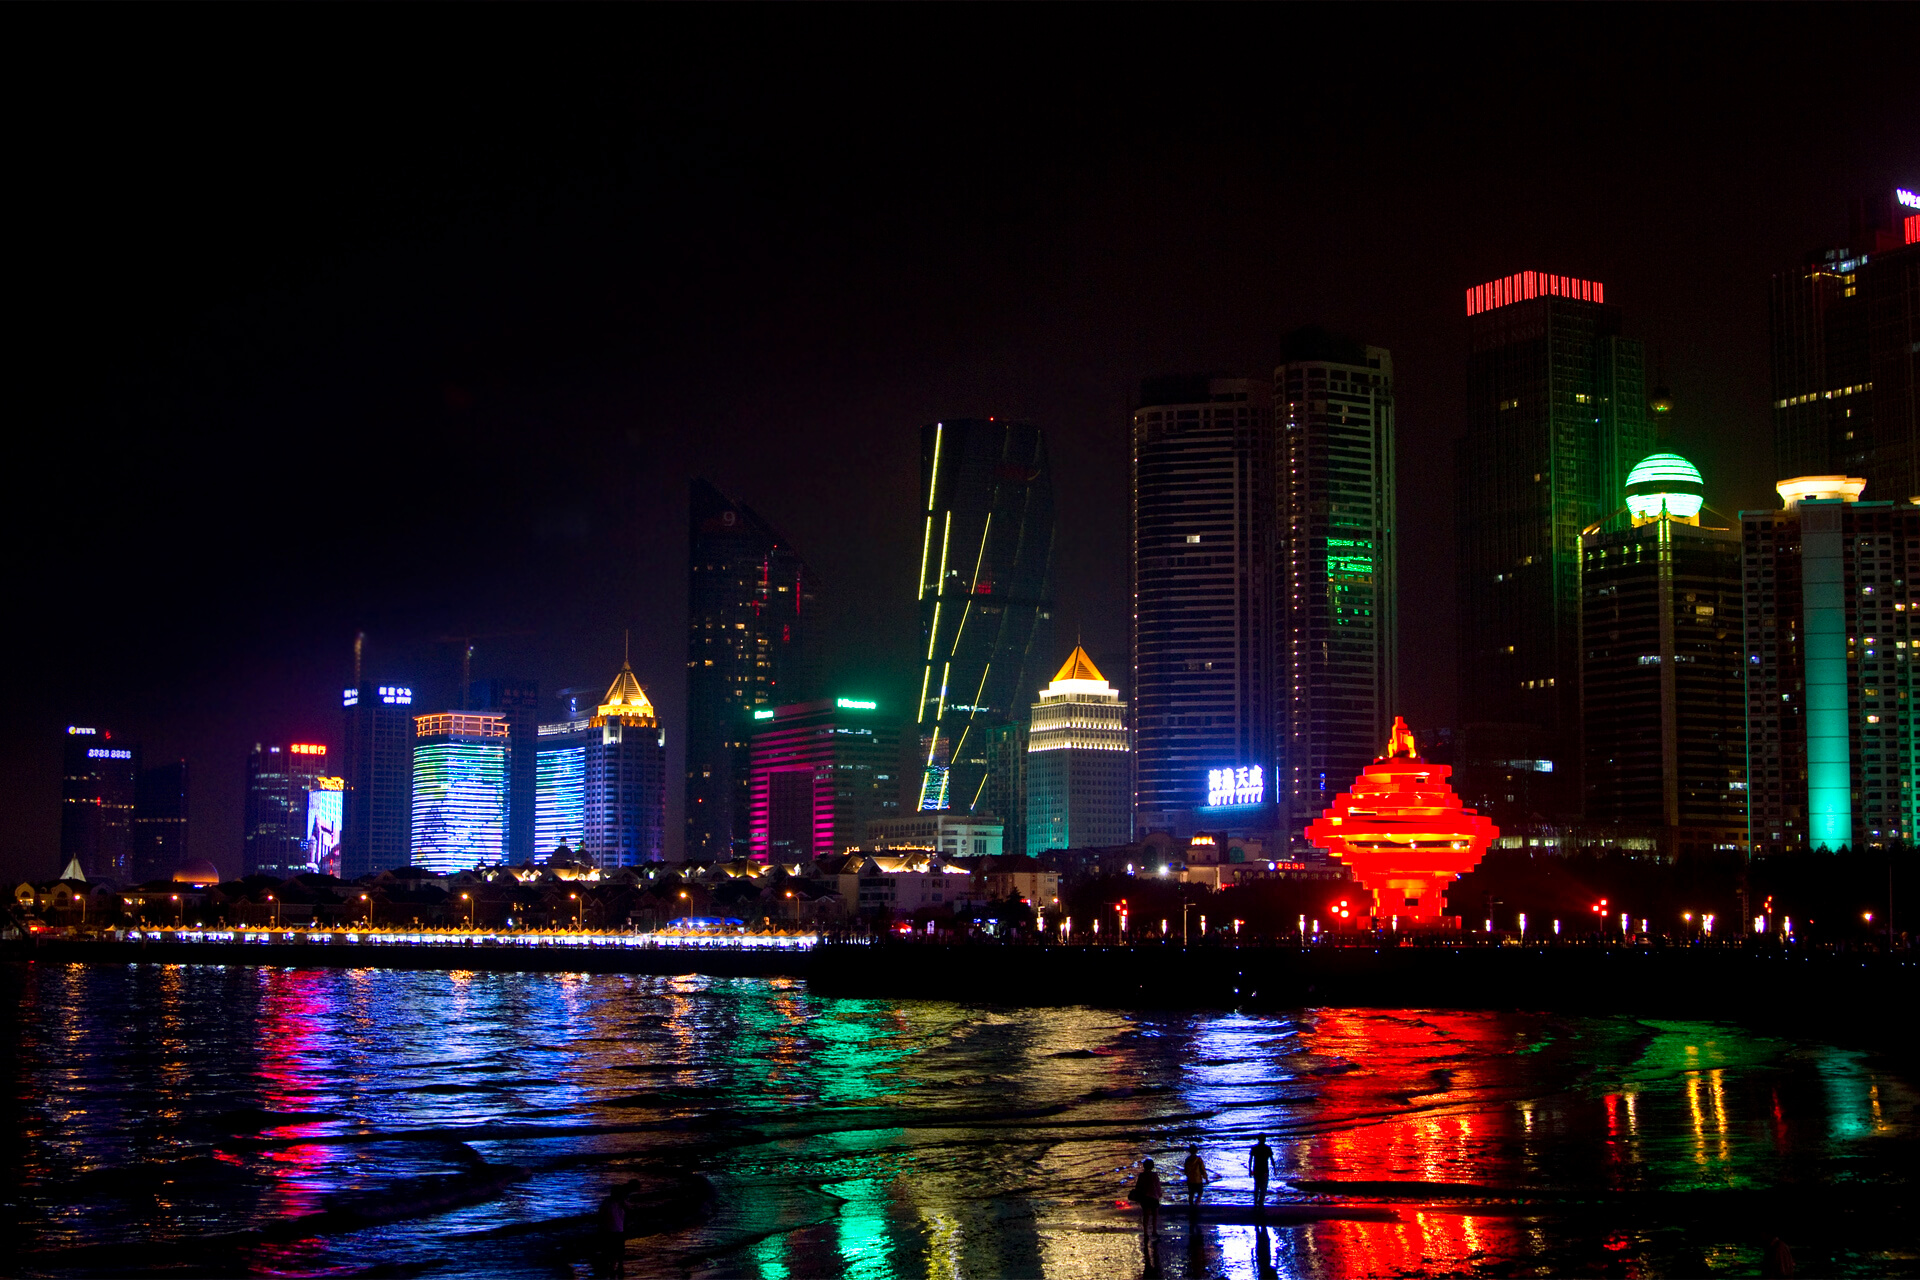 Zwart - Qingdao, 2014. Häni A.H. - Flickr